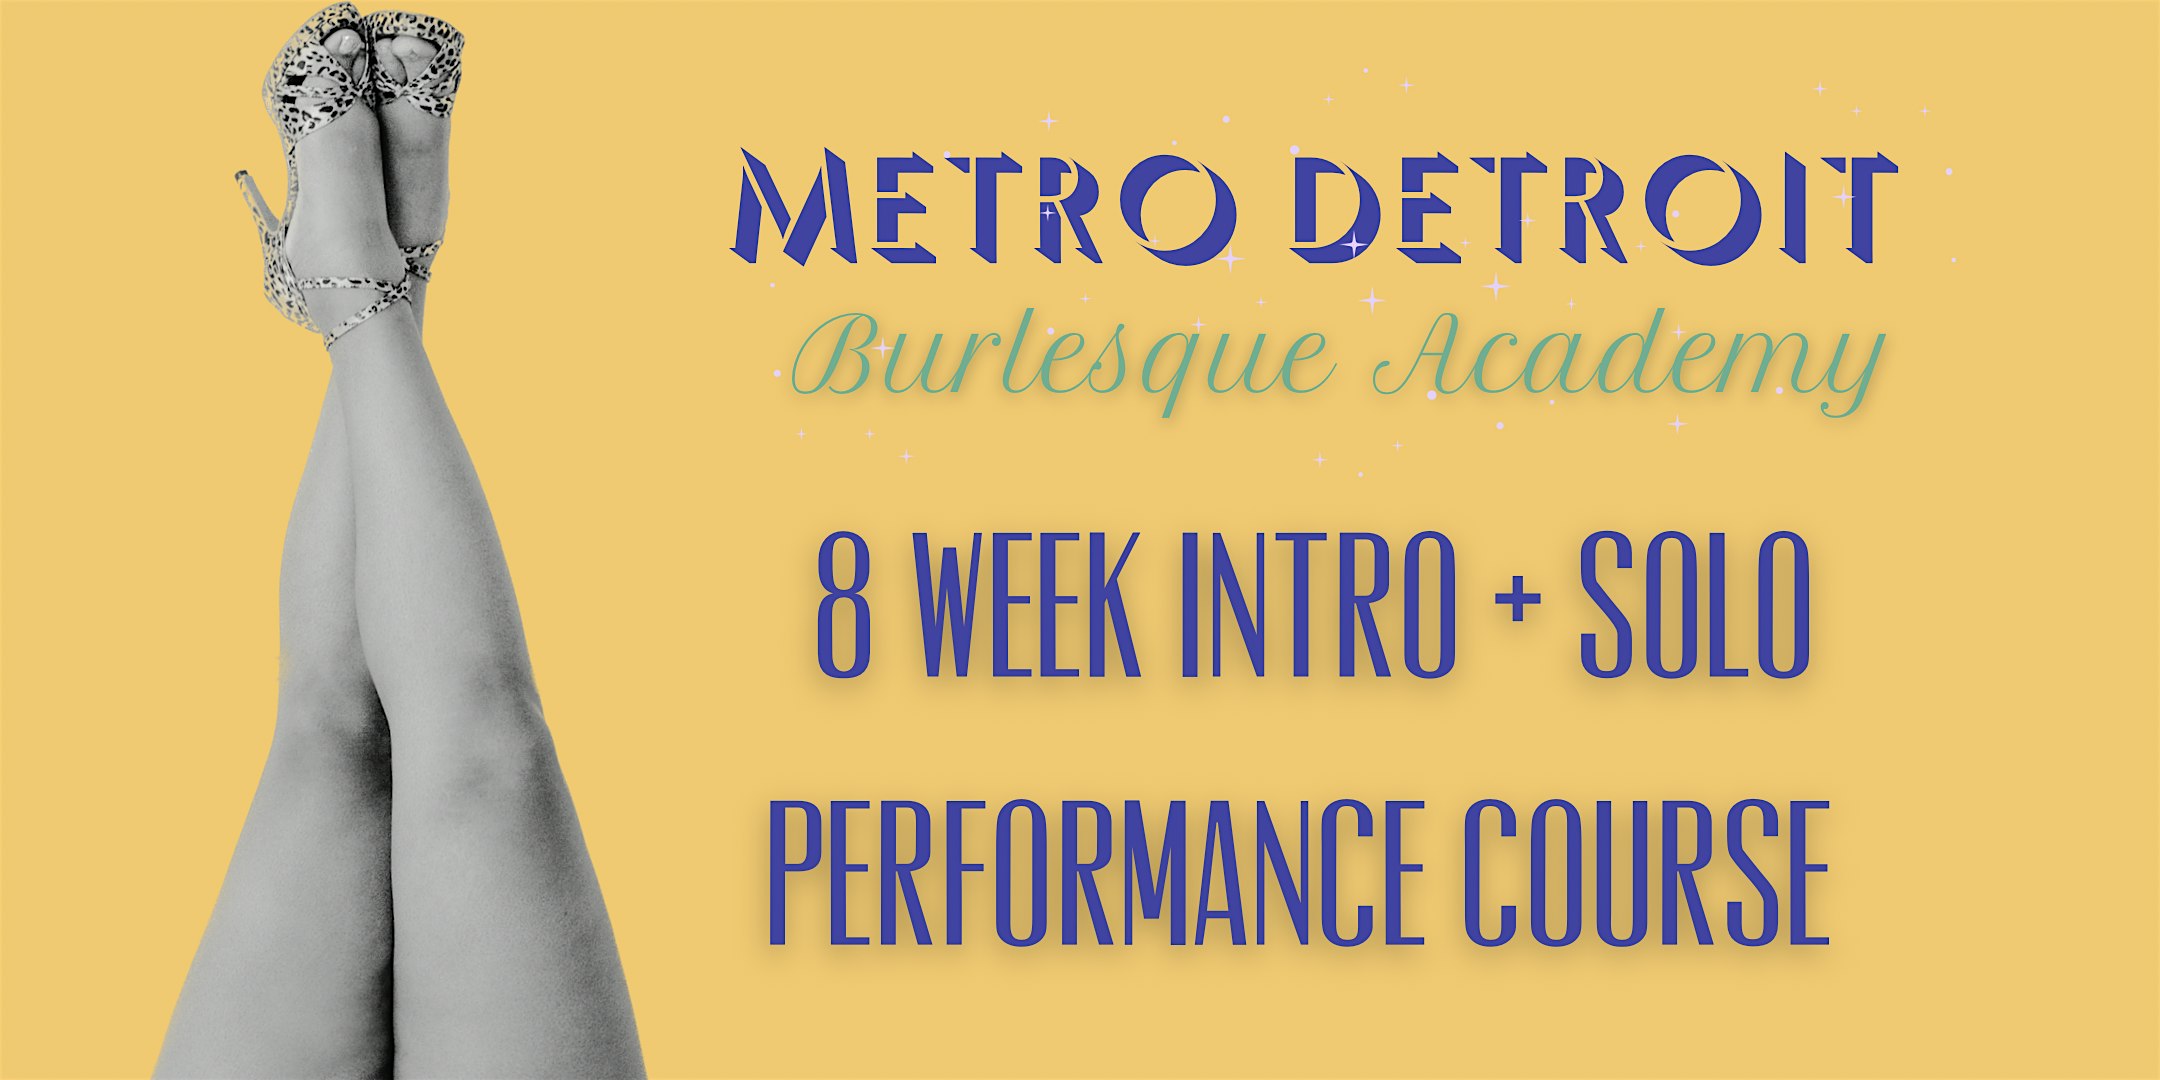 Metro Detroit Burlesque Academy: 8 Week Intro + Solo Performance Course